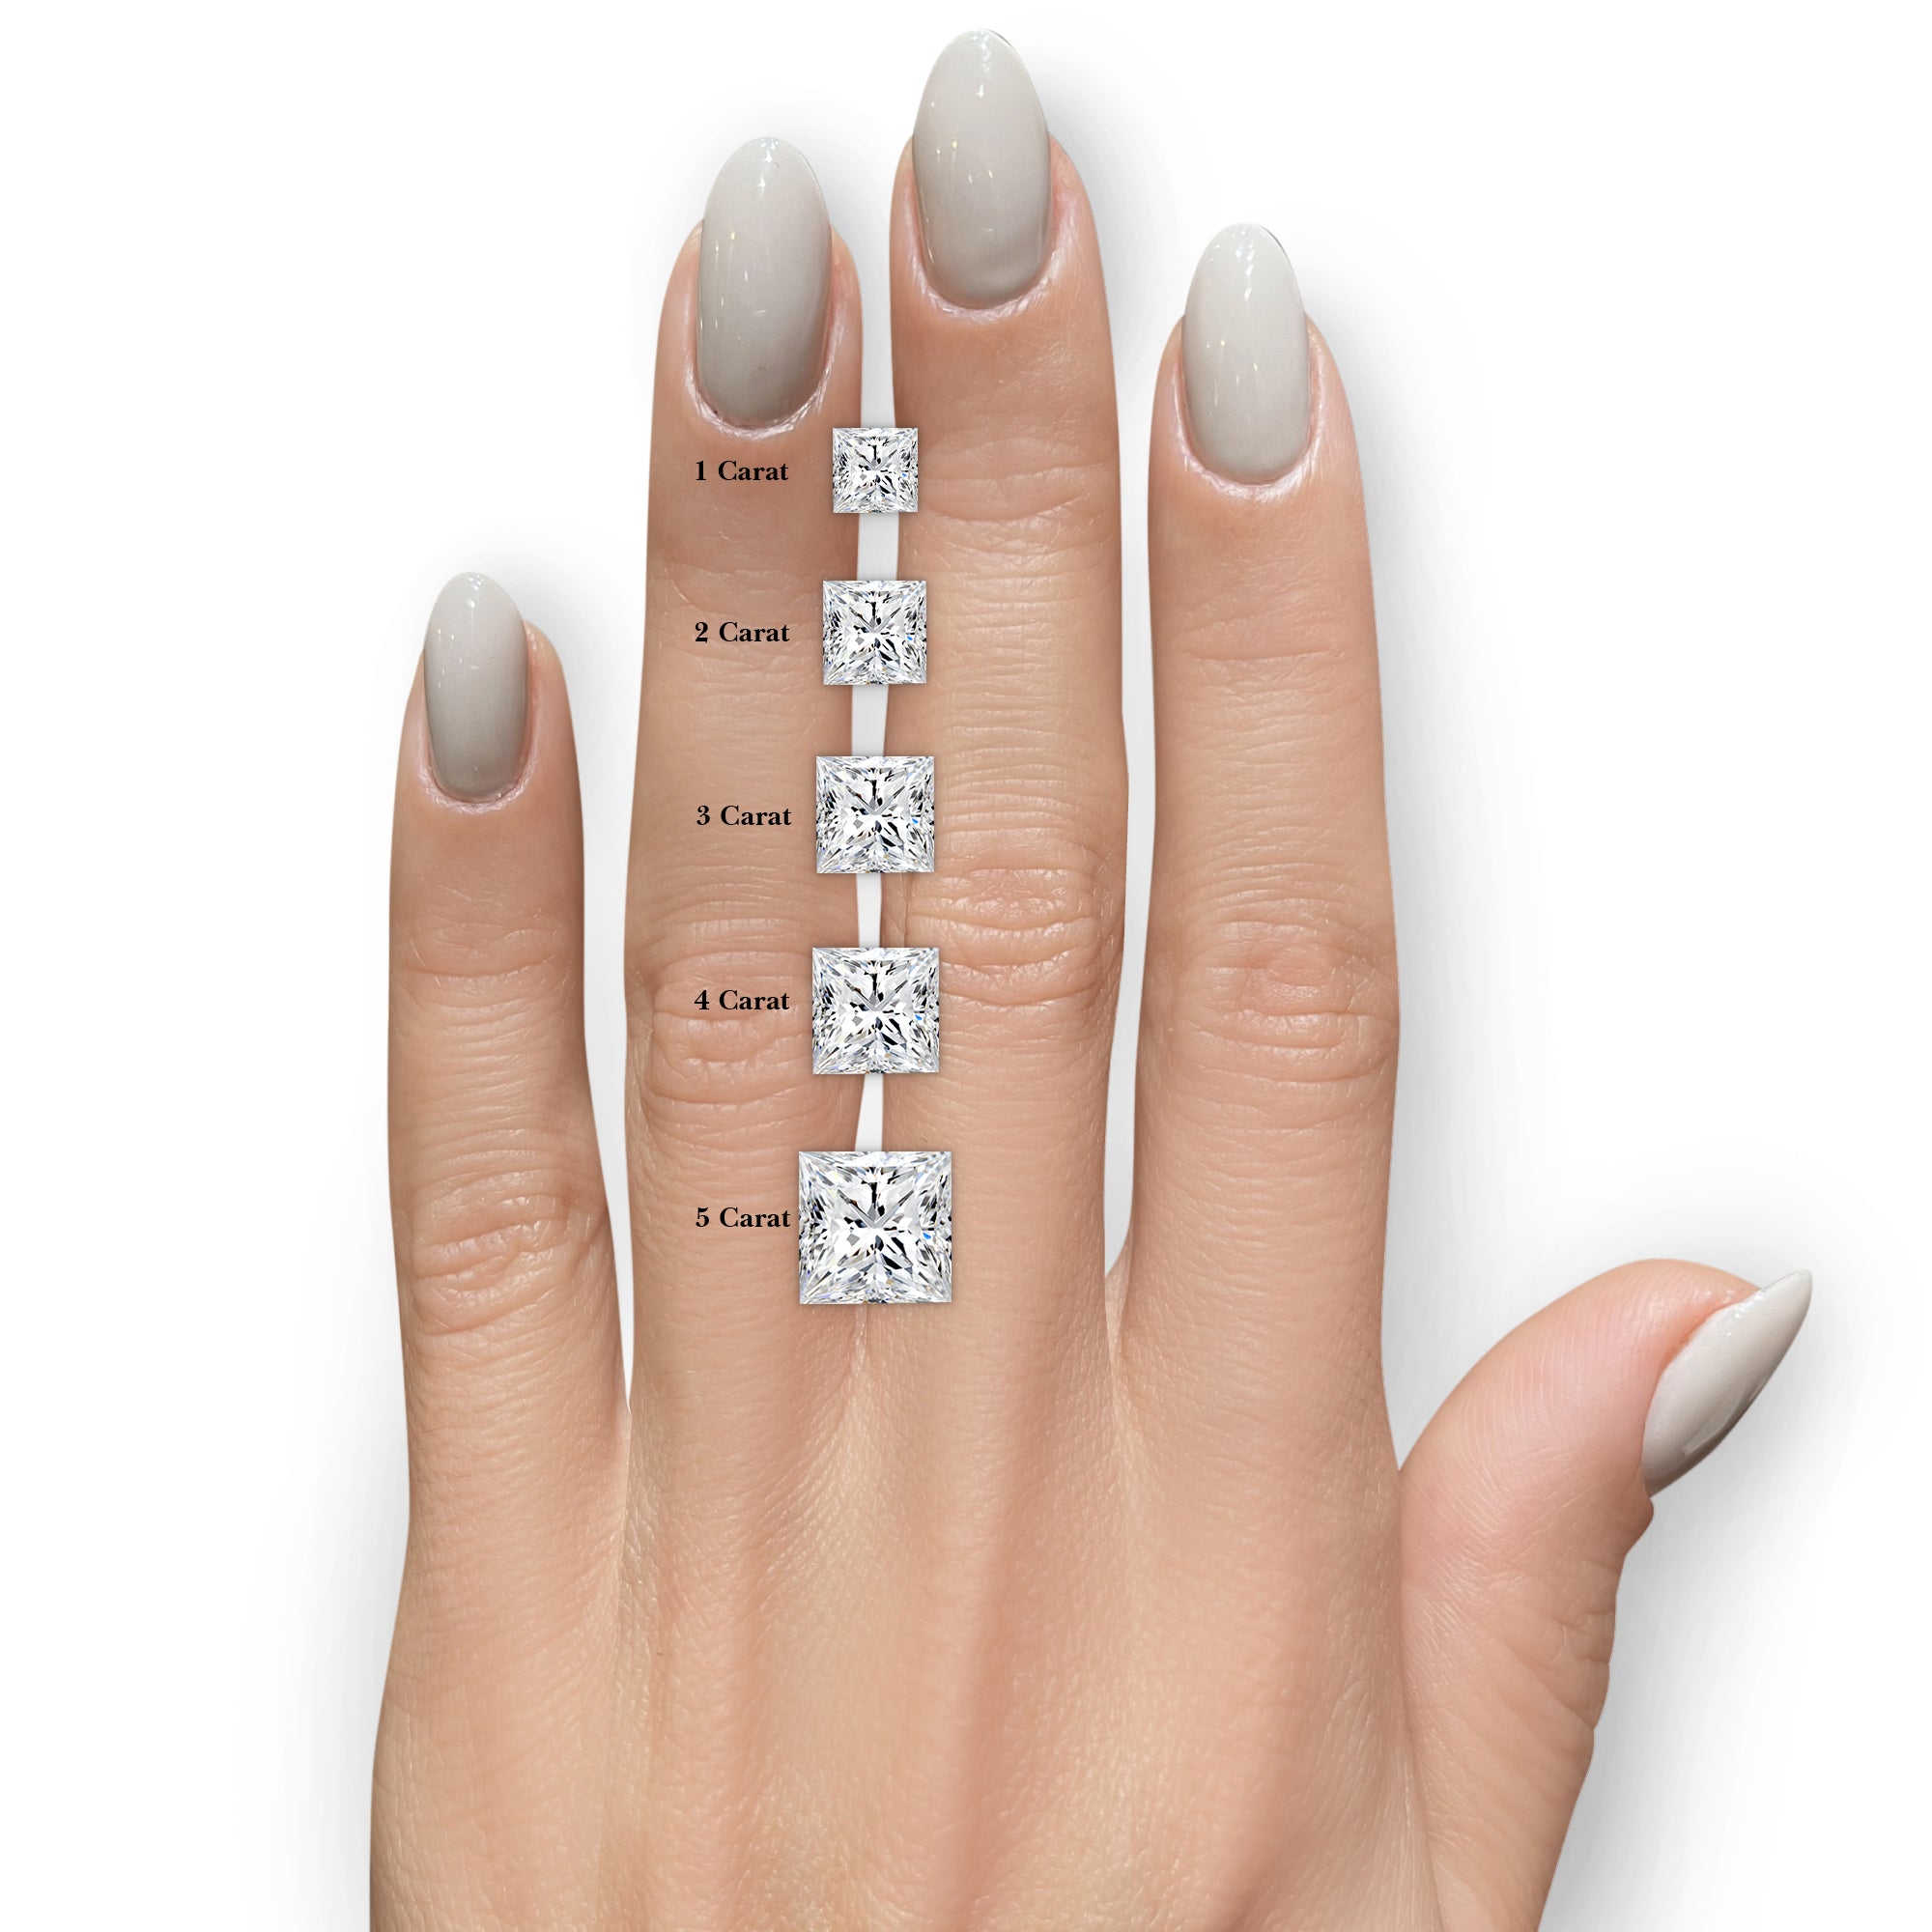 Fiona Diamond Engagement Ring -Platinum